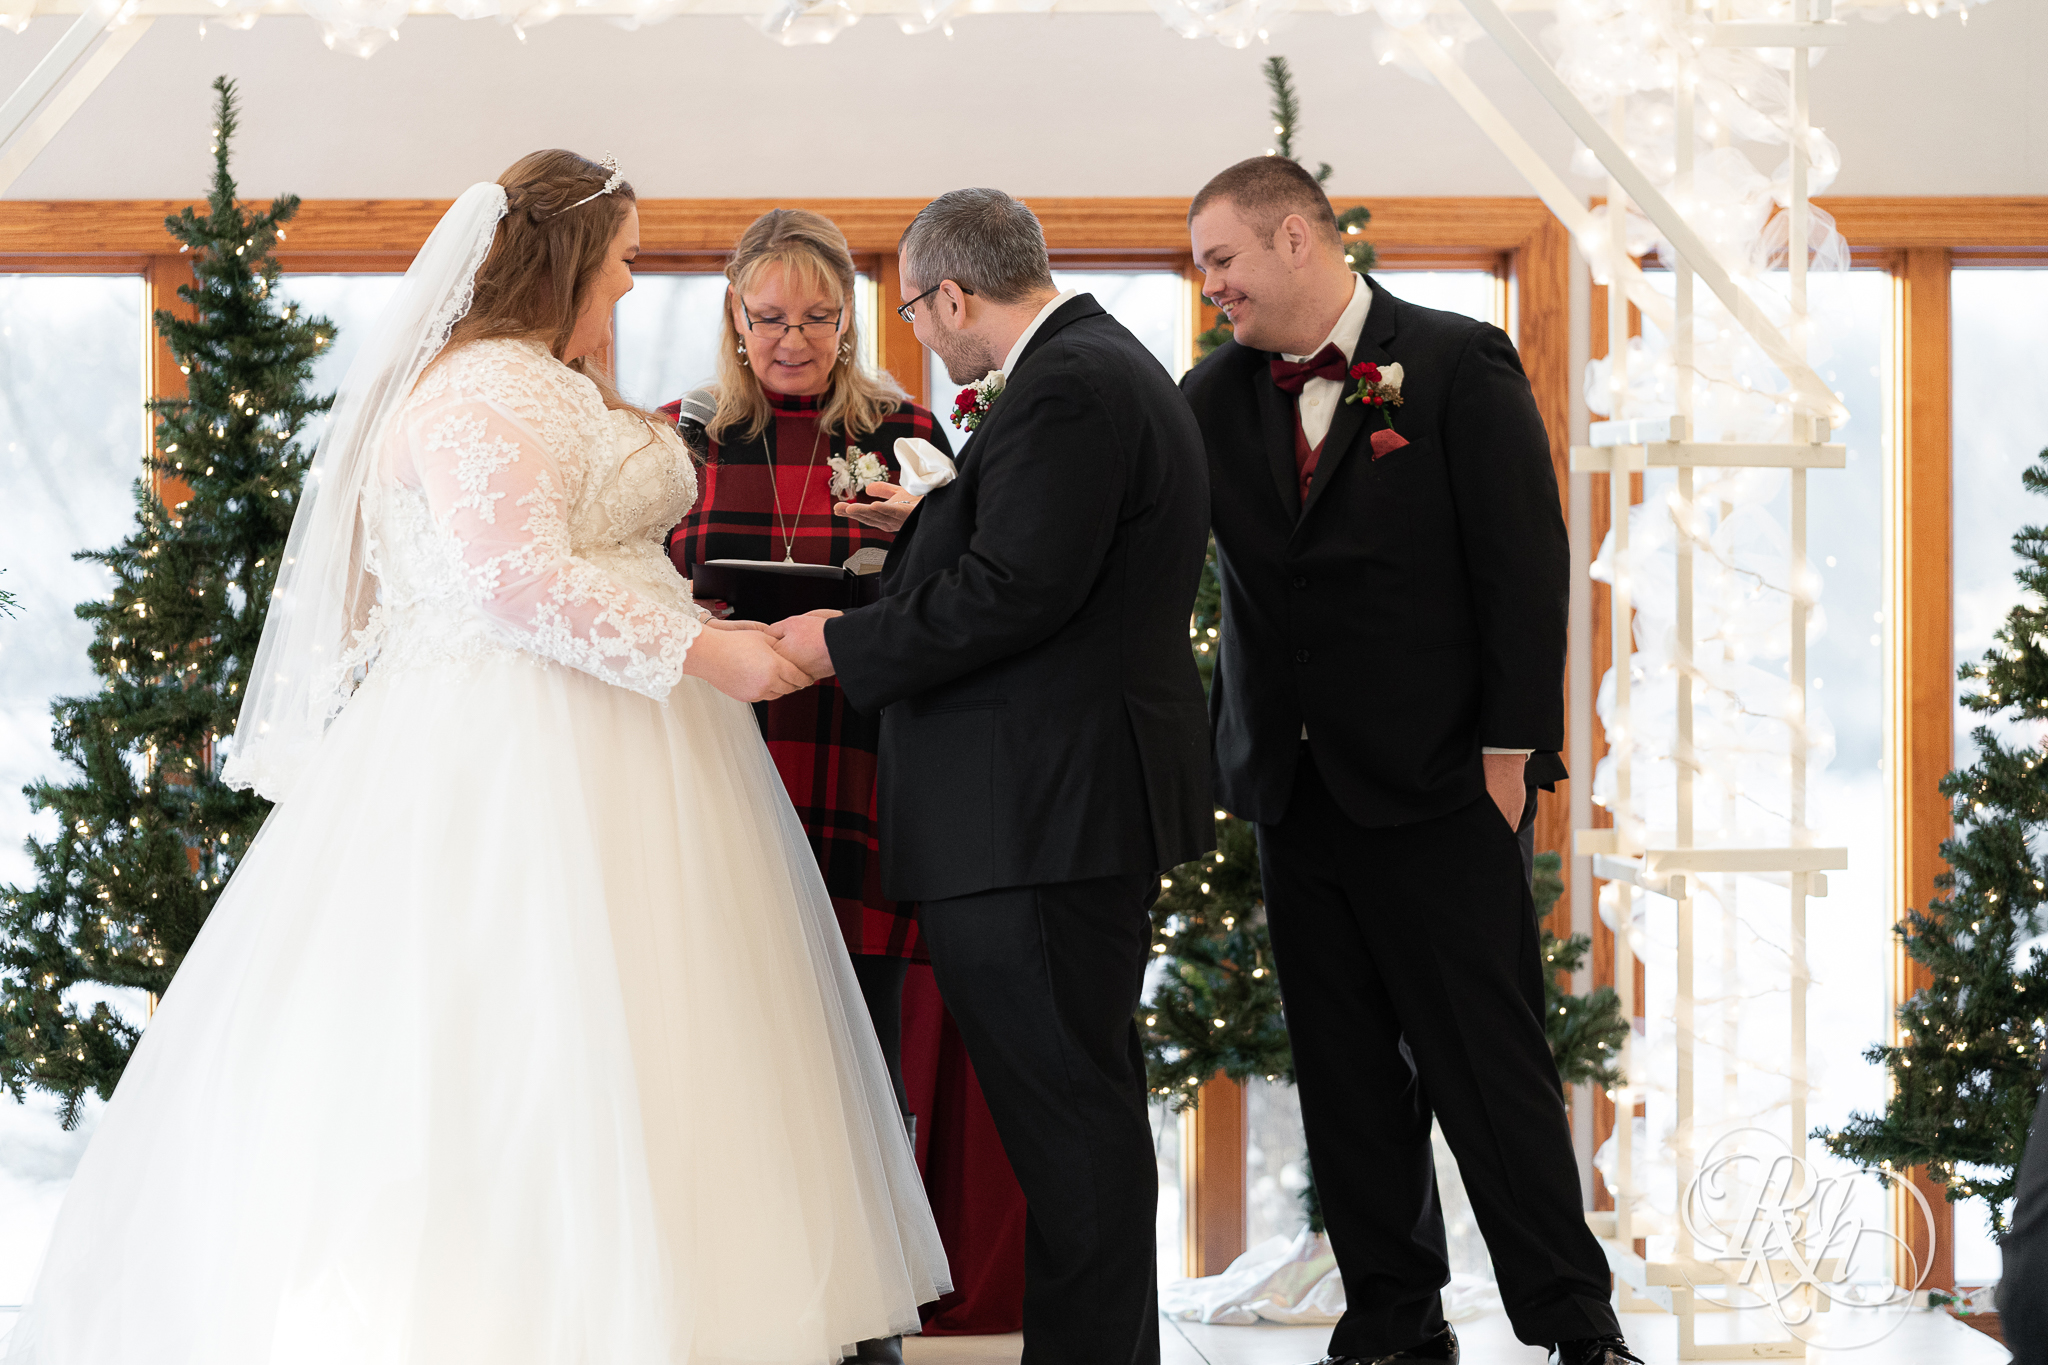 Wedding ceremony at Christmas wedding at Oak Glen Golf Course in Stillwater, Minnesota.